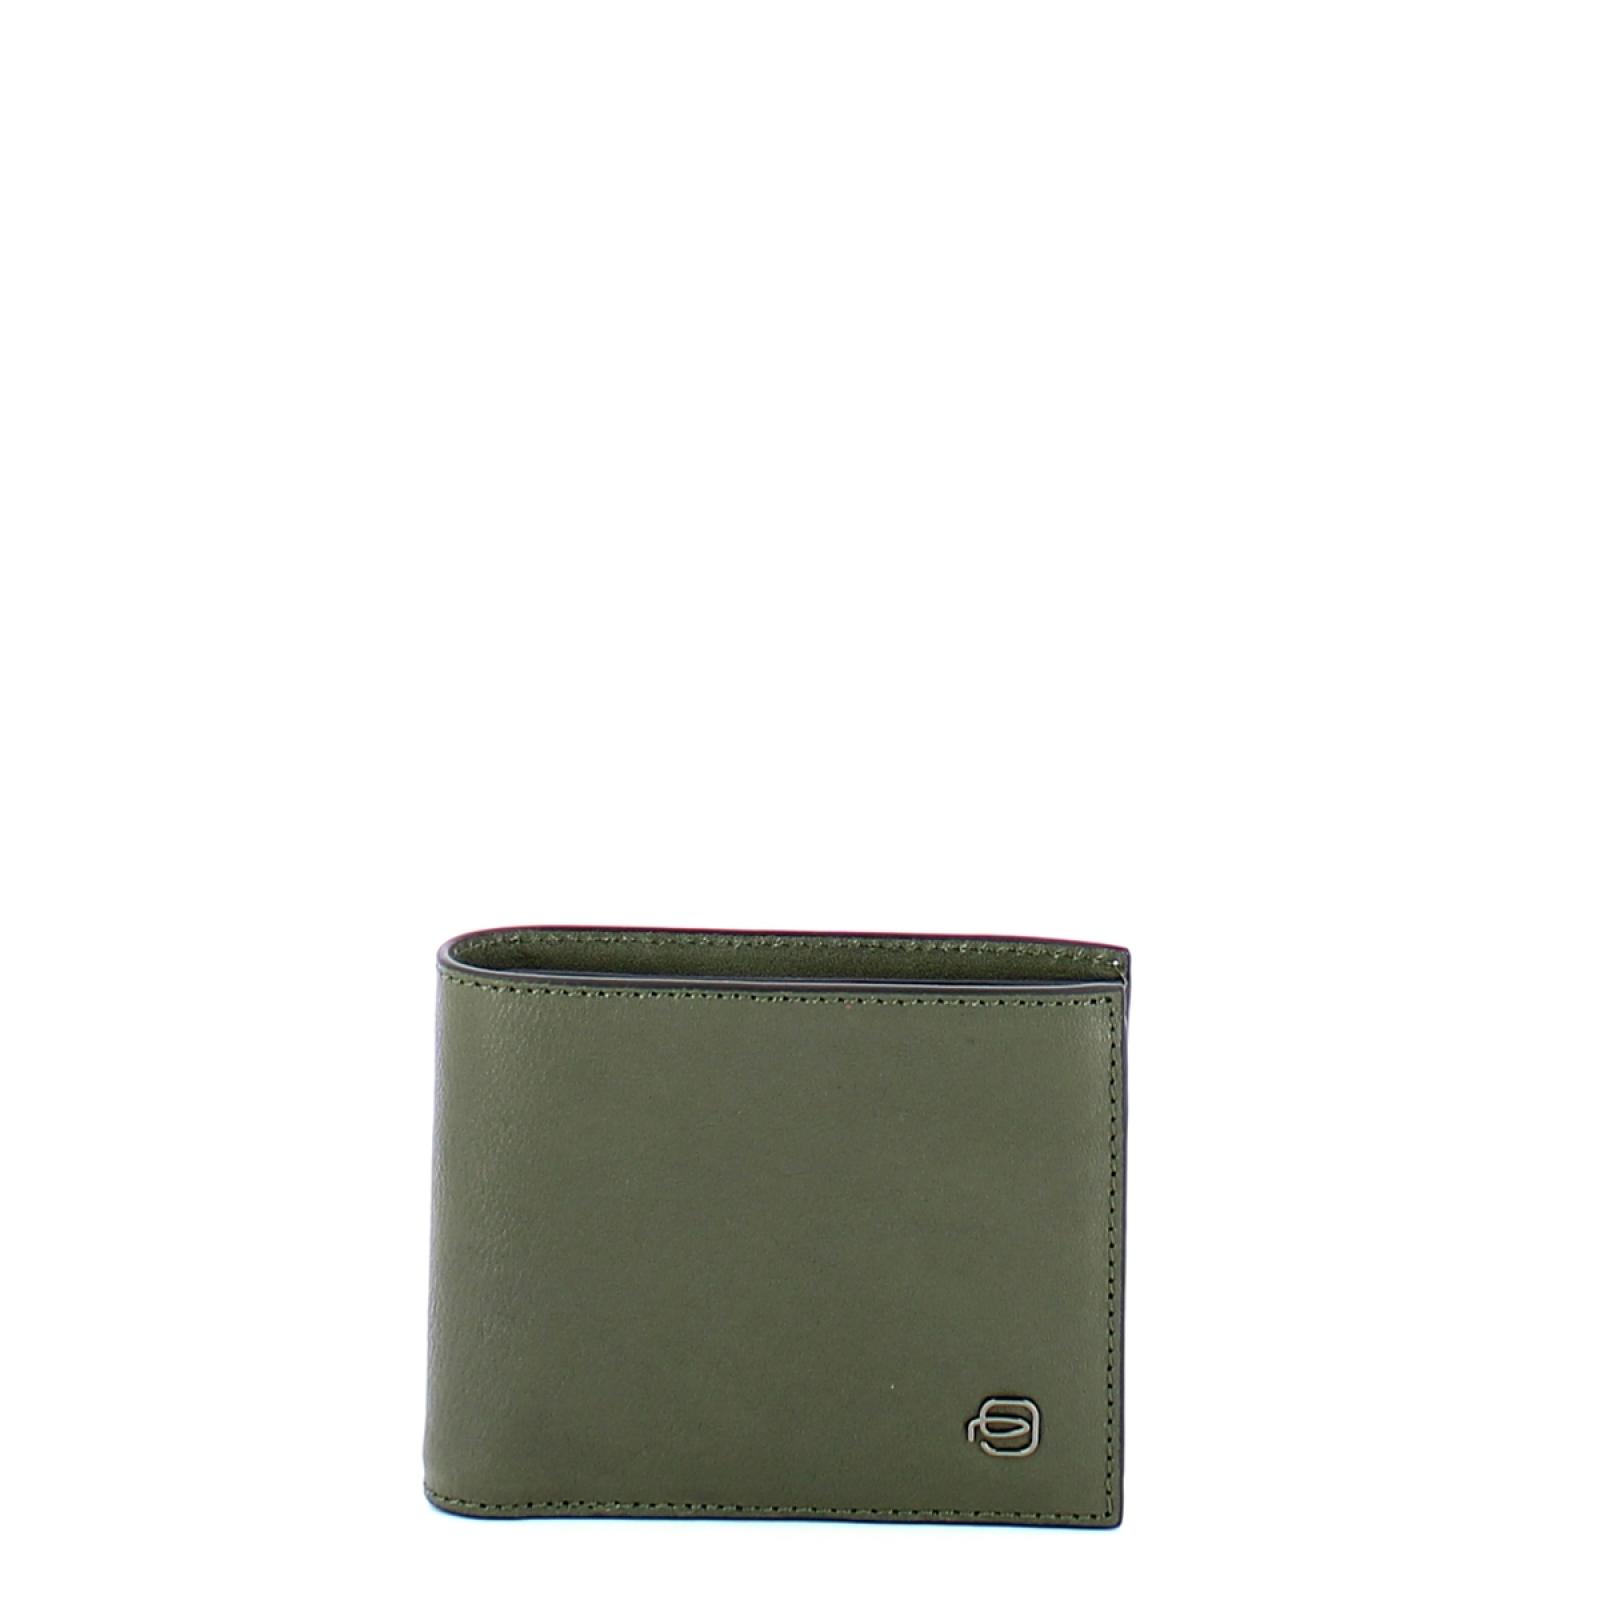 Piquadro Portafoglio con portamonete RFID Black Square - 1